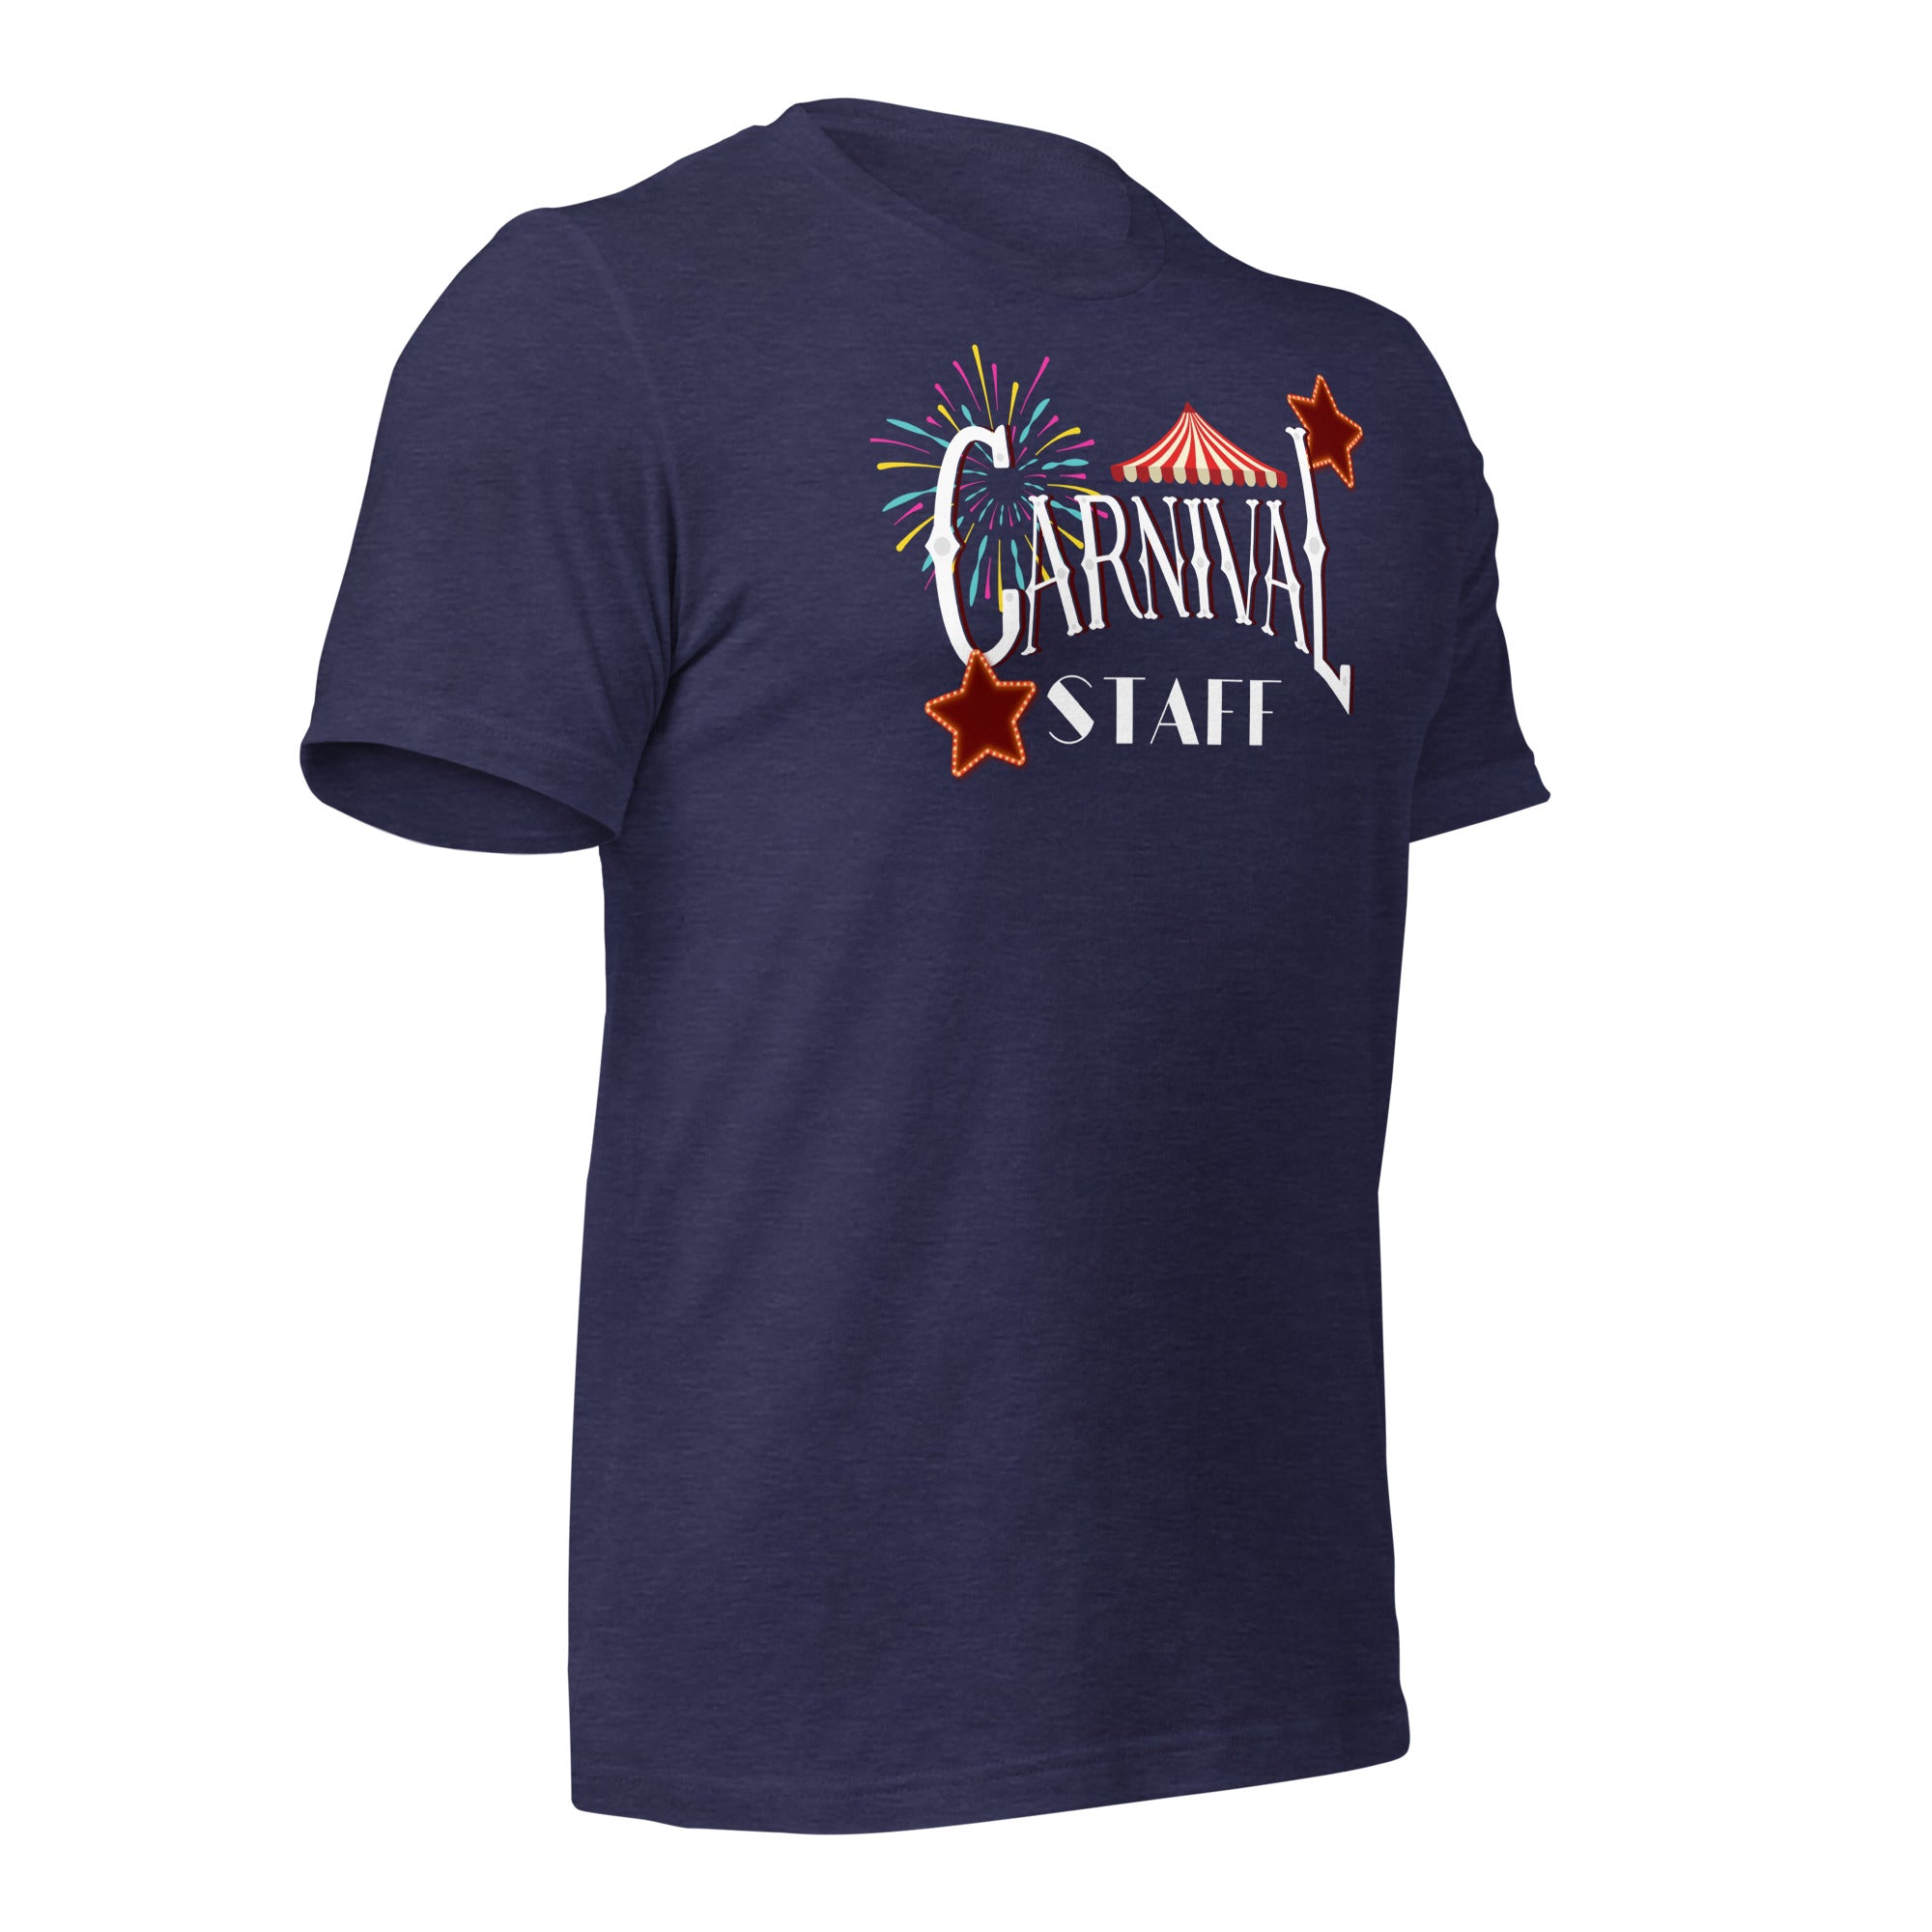 Event Crew Carnival Staff T-Shirt